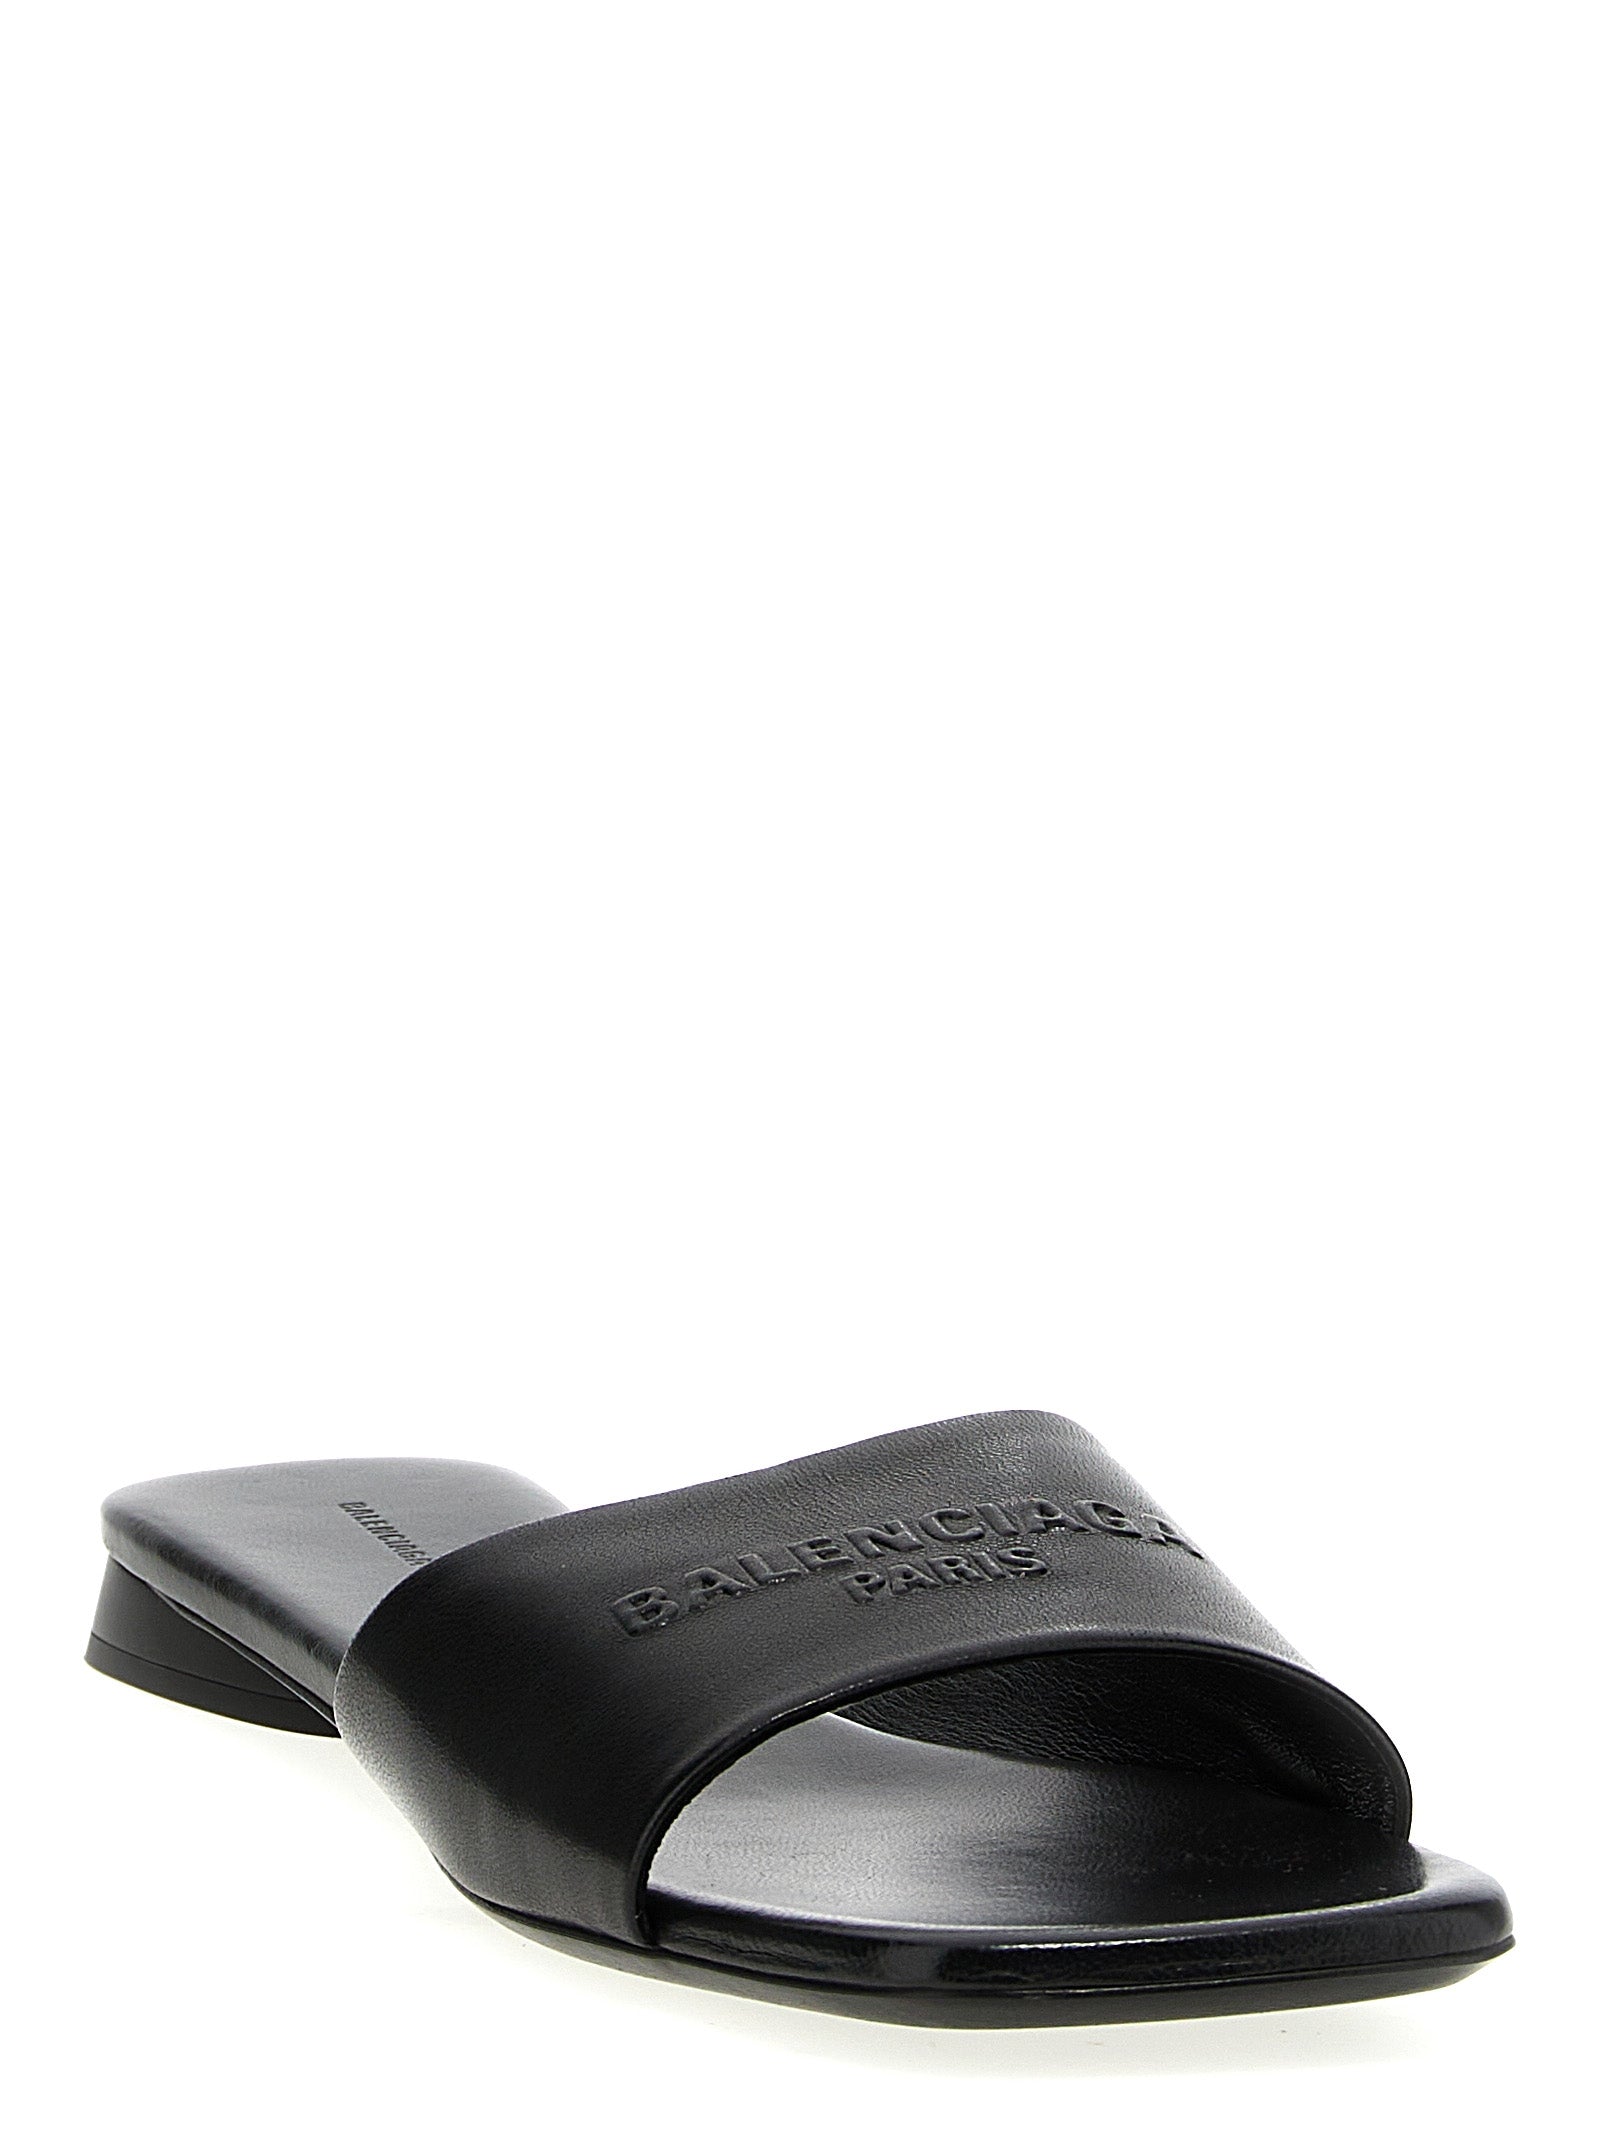 Shop Balenciaga Duty Free Sandals Black